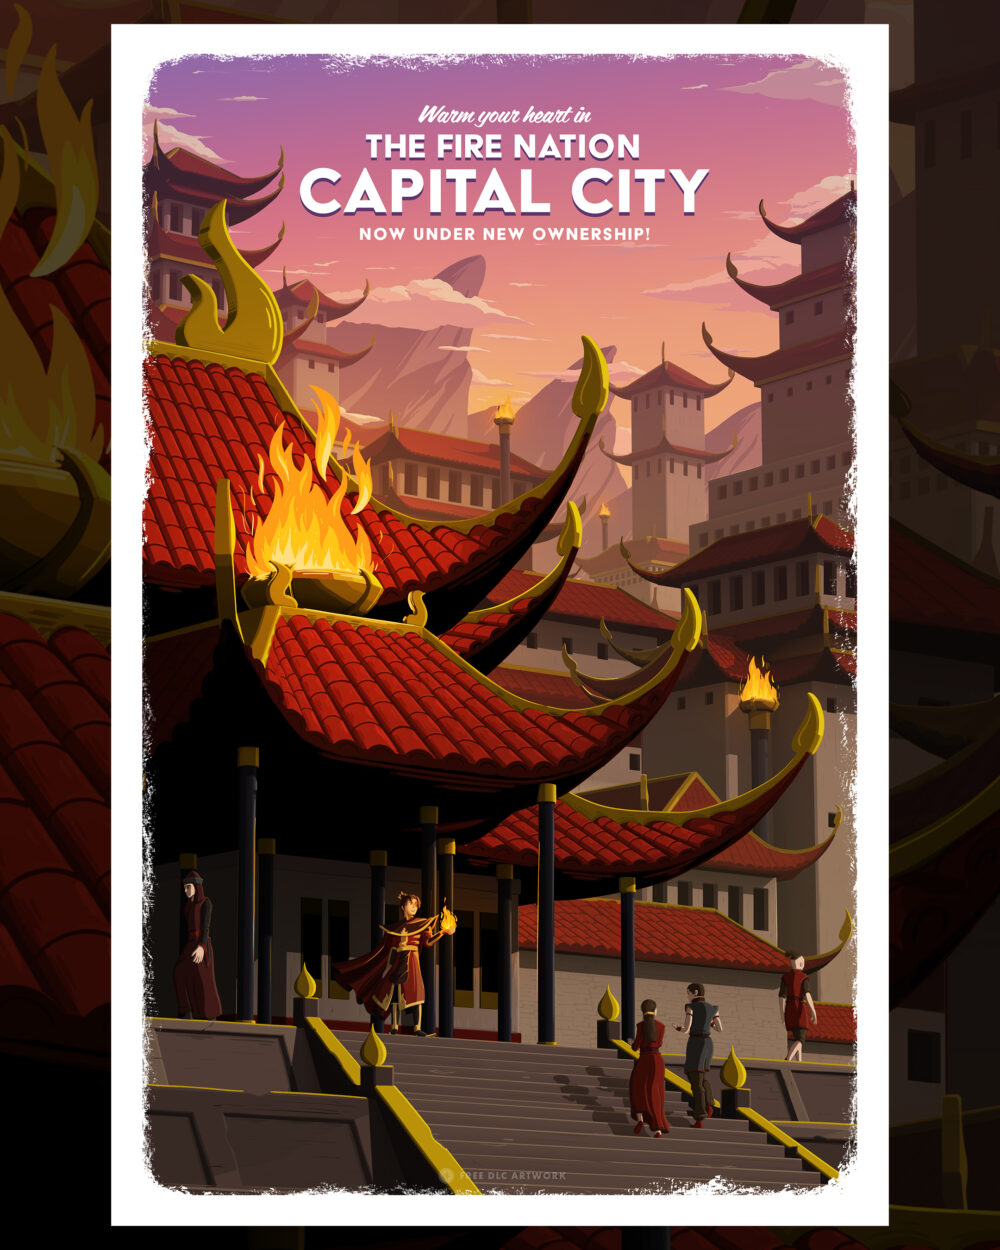 Avatar 4-poster deal: Capital City